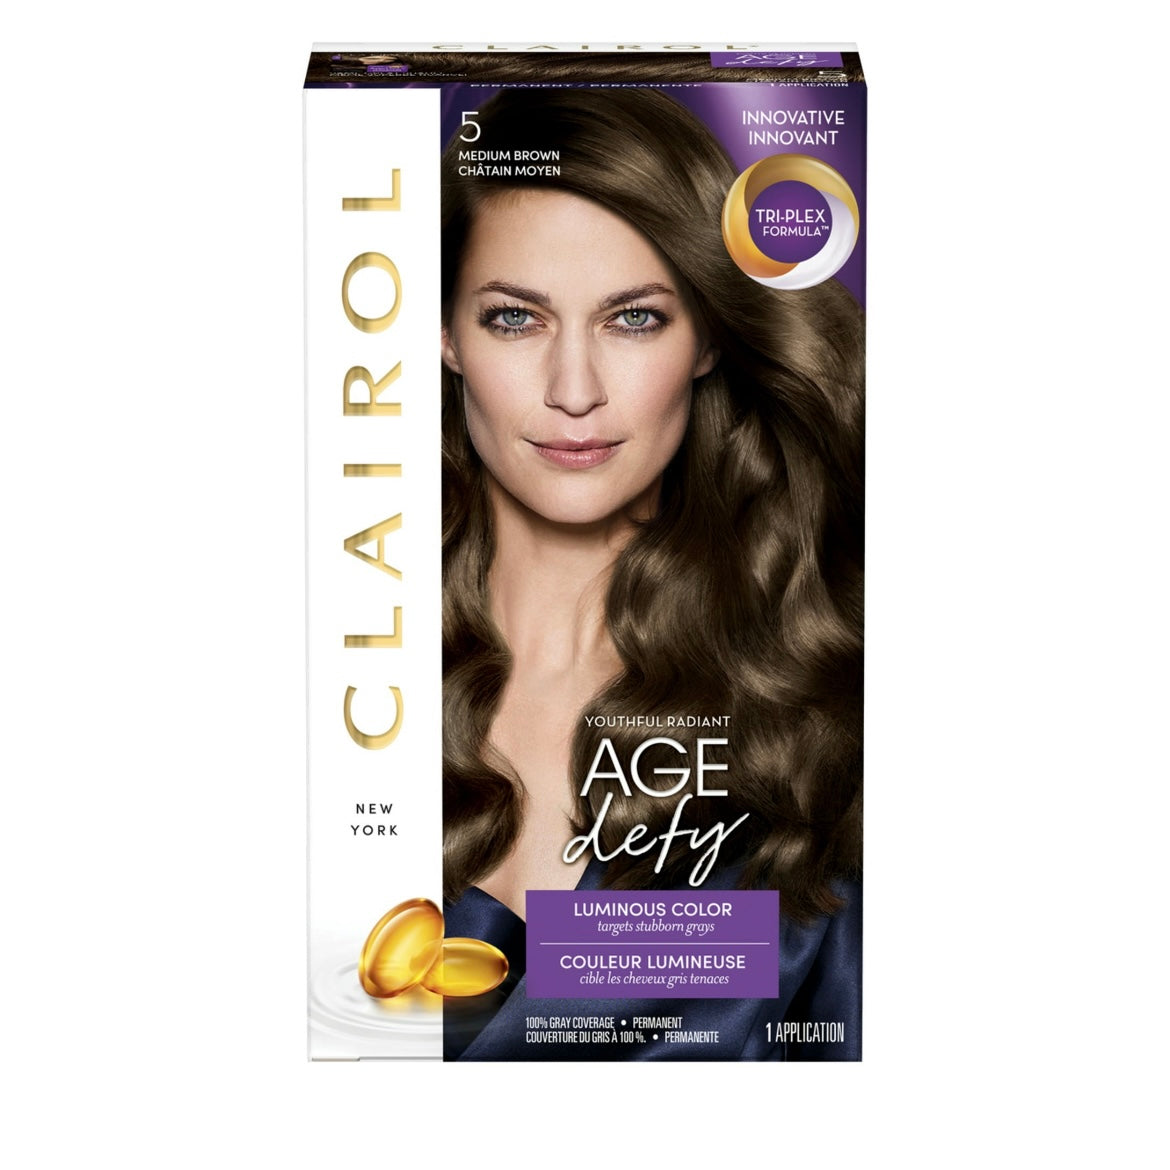 Clairol Age Defy Hair Color